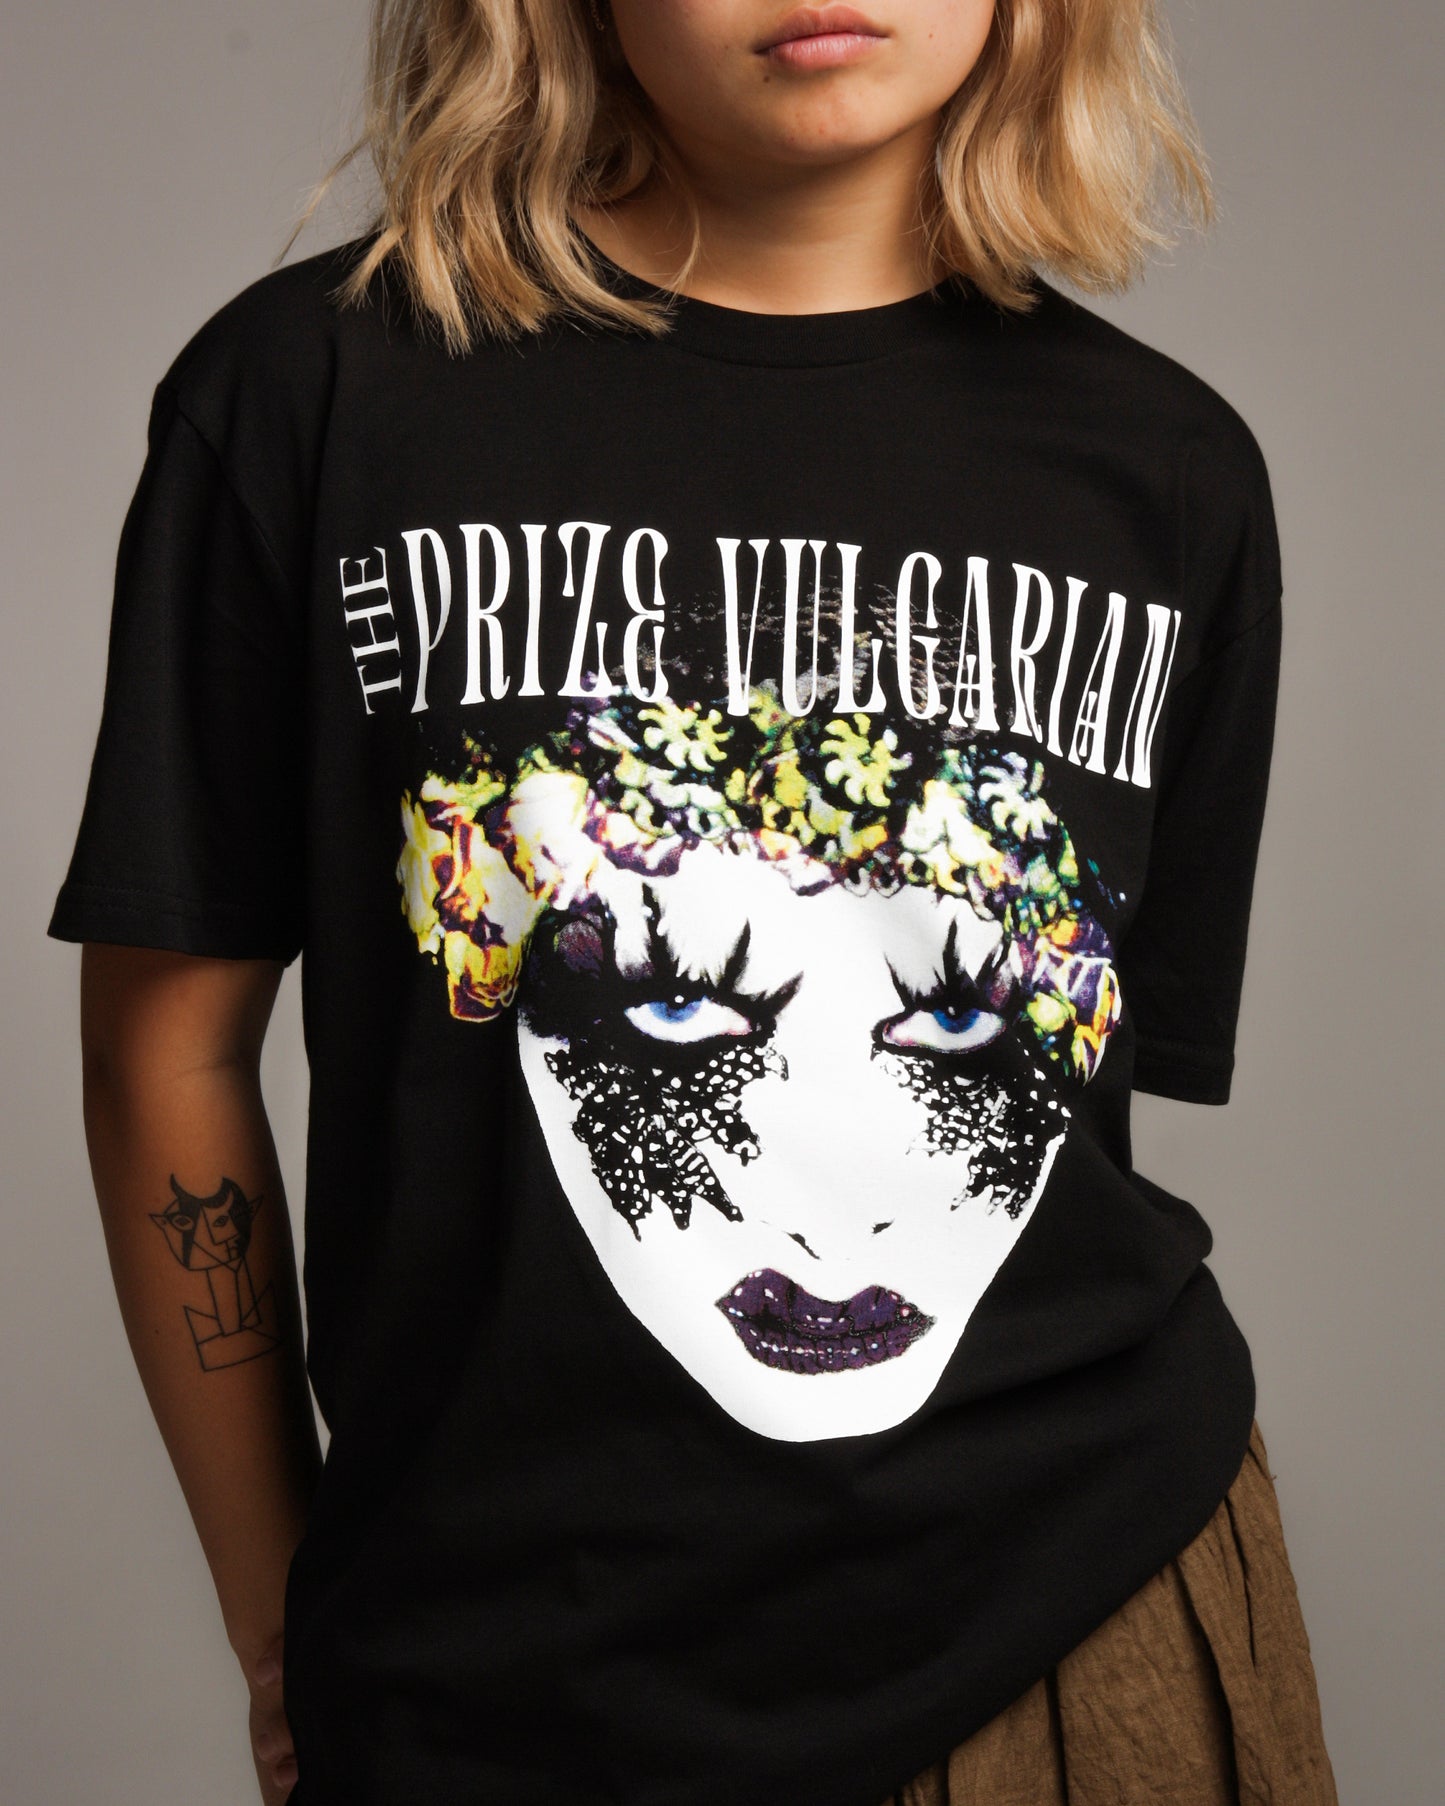 The Prize Vulgarian T-Shirt